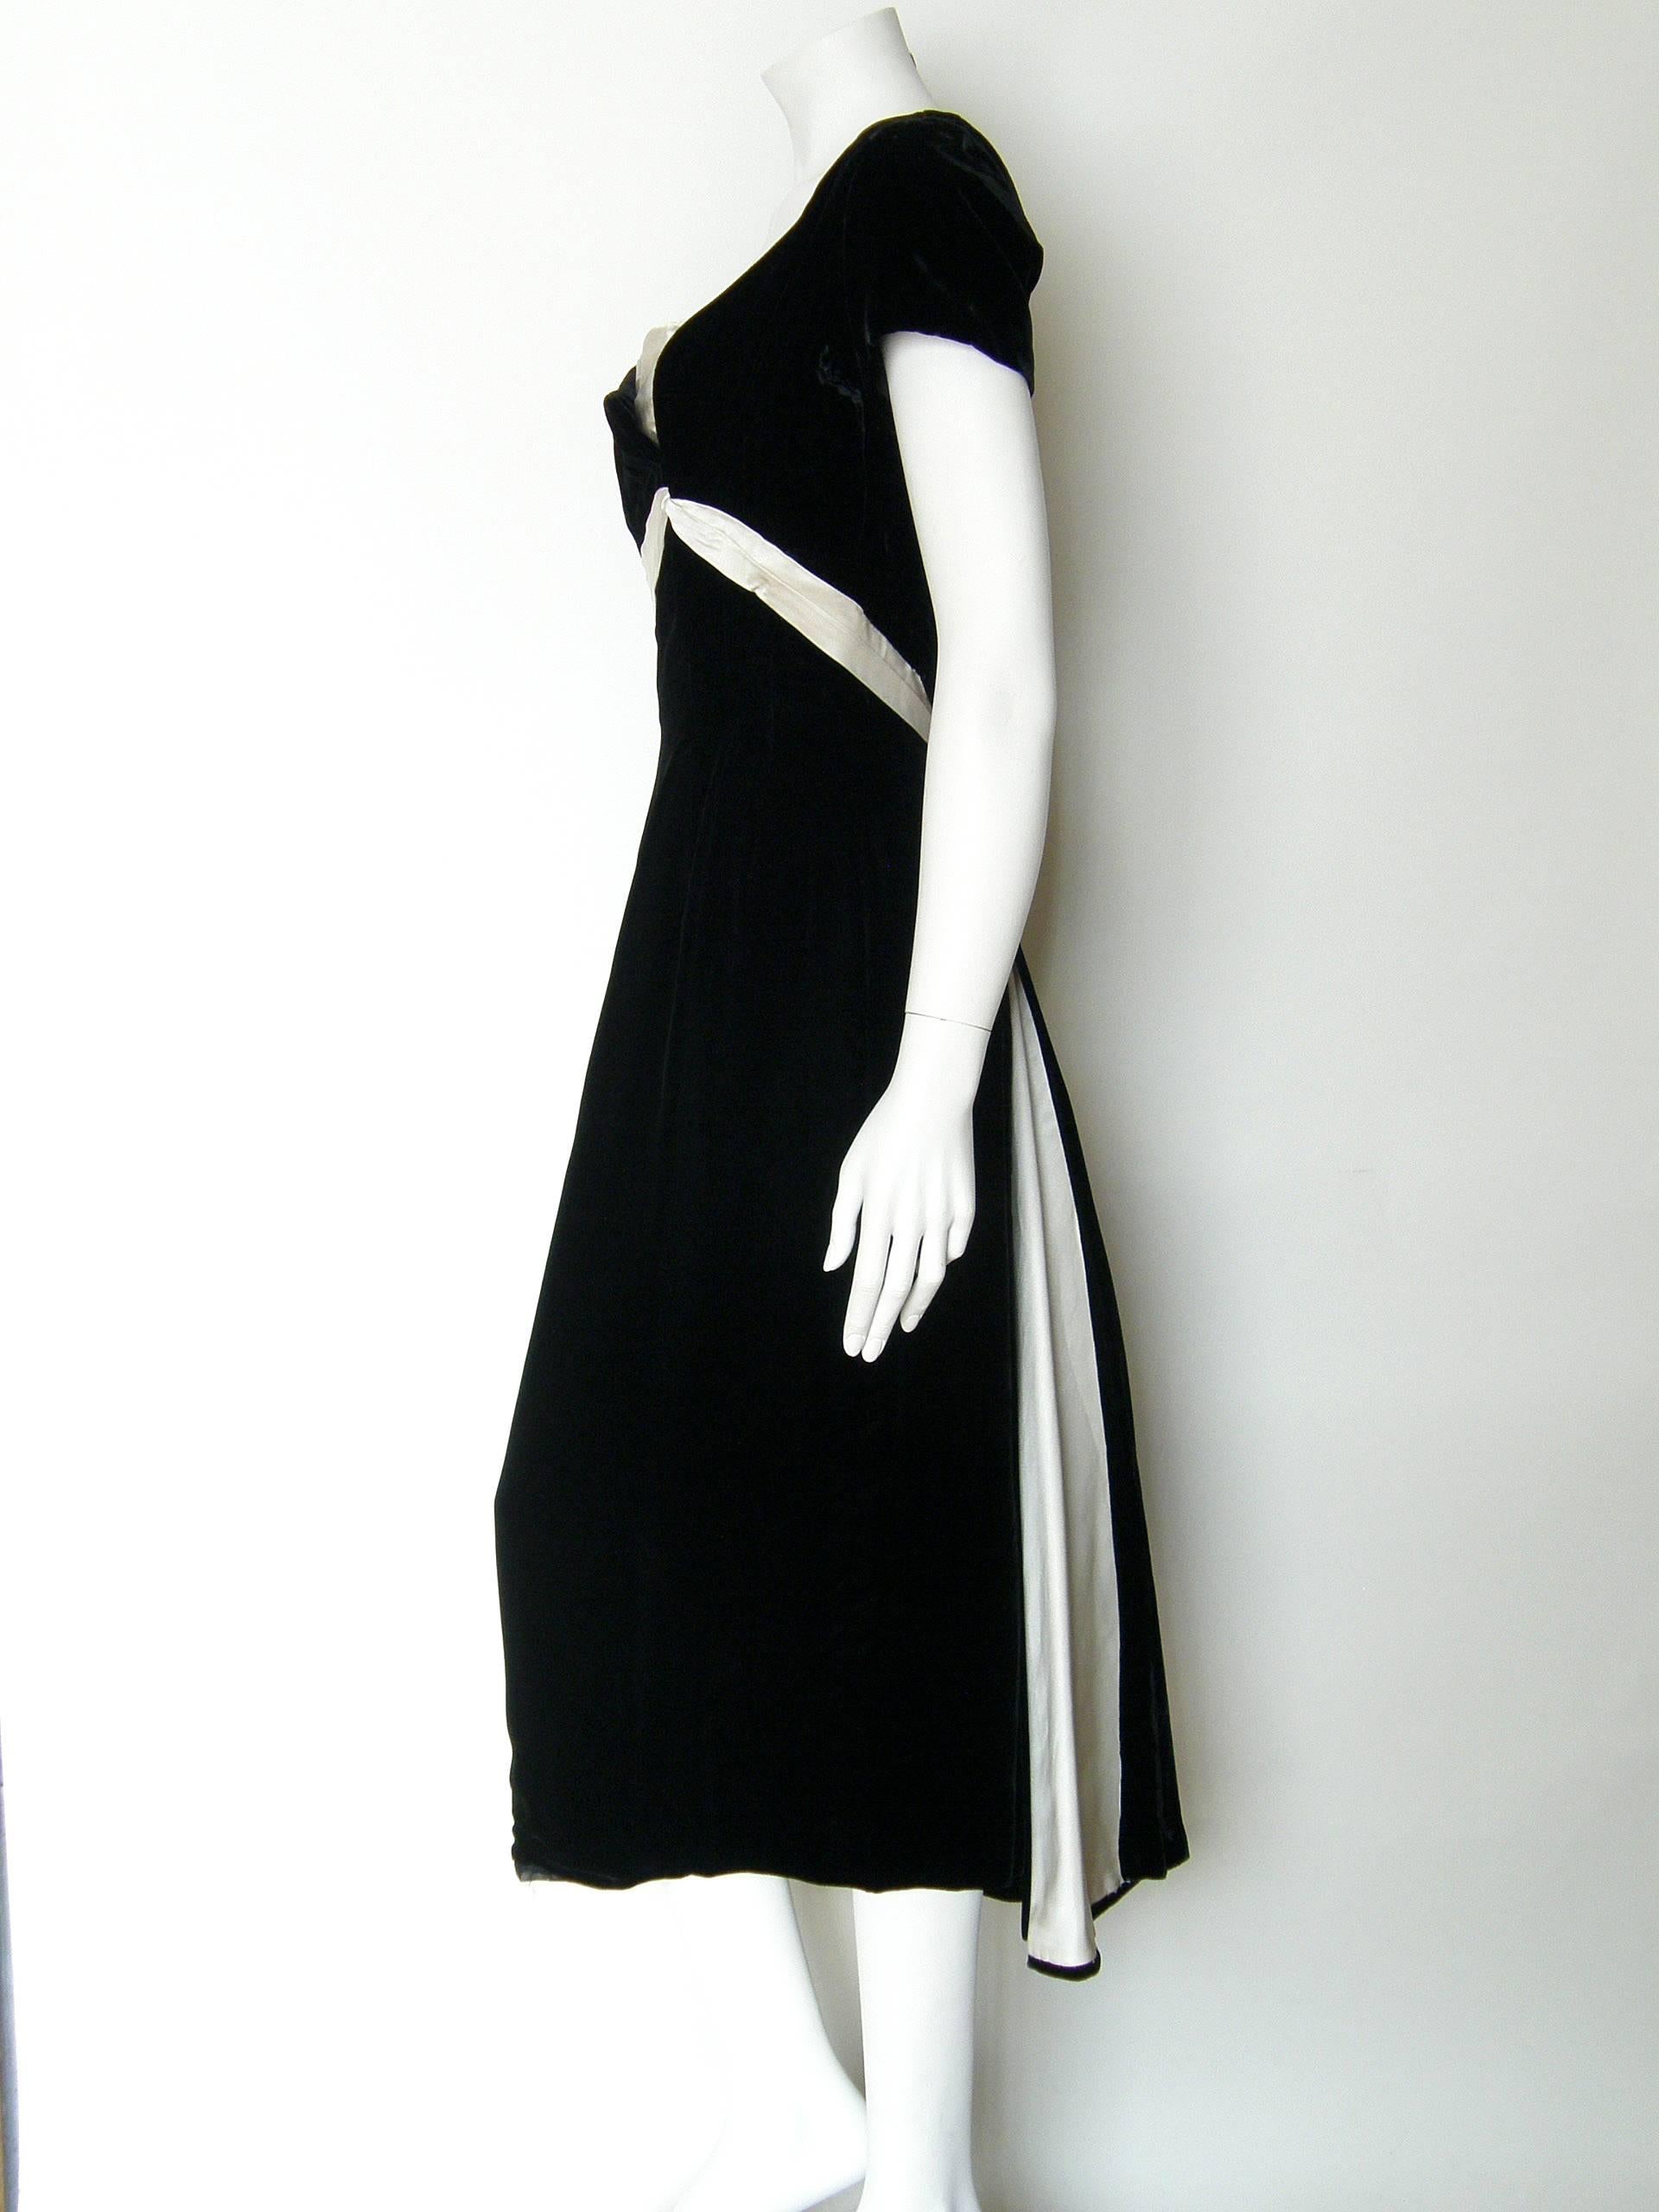 Women's Ceil Chapman Black Velvet and Ivory Satin Cocktail Dress